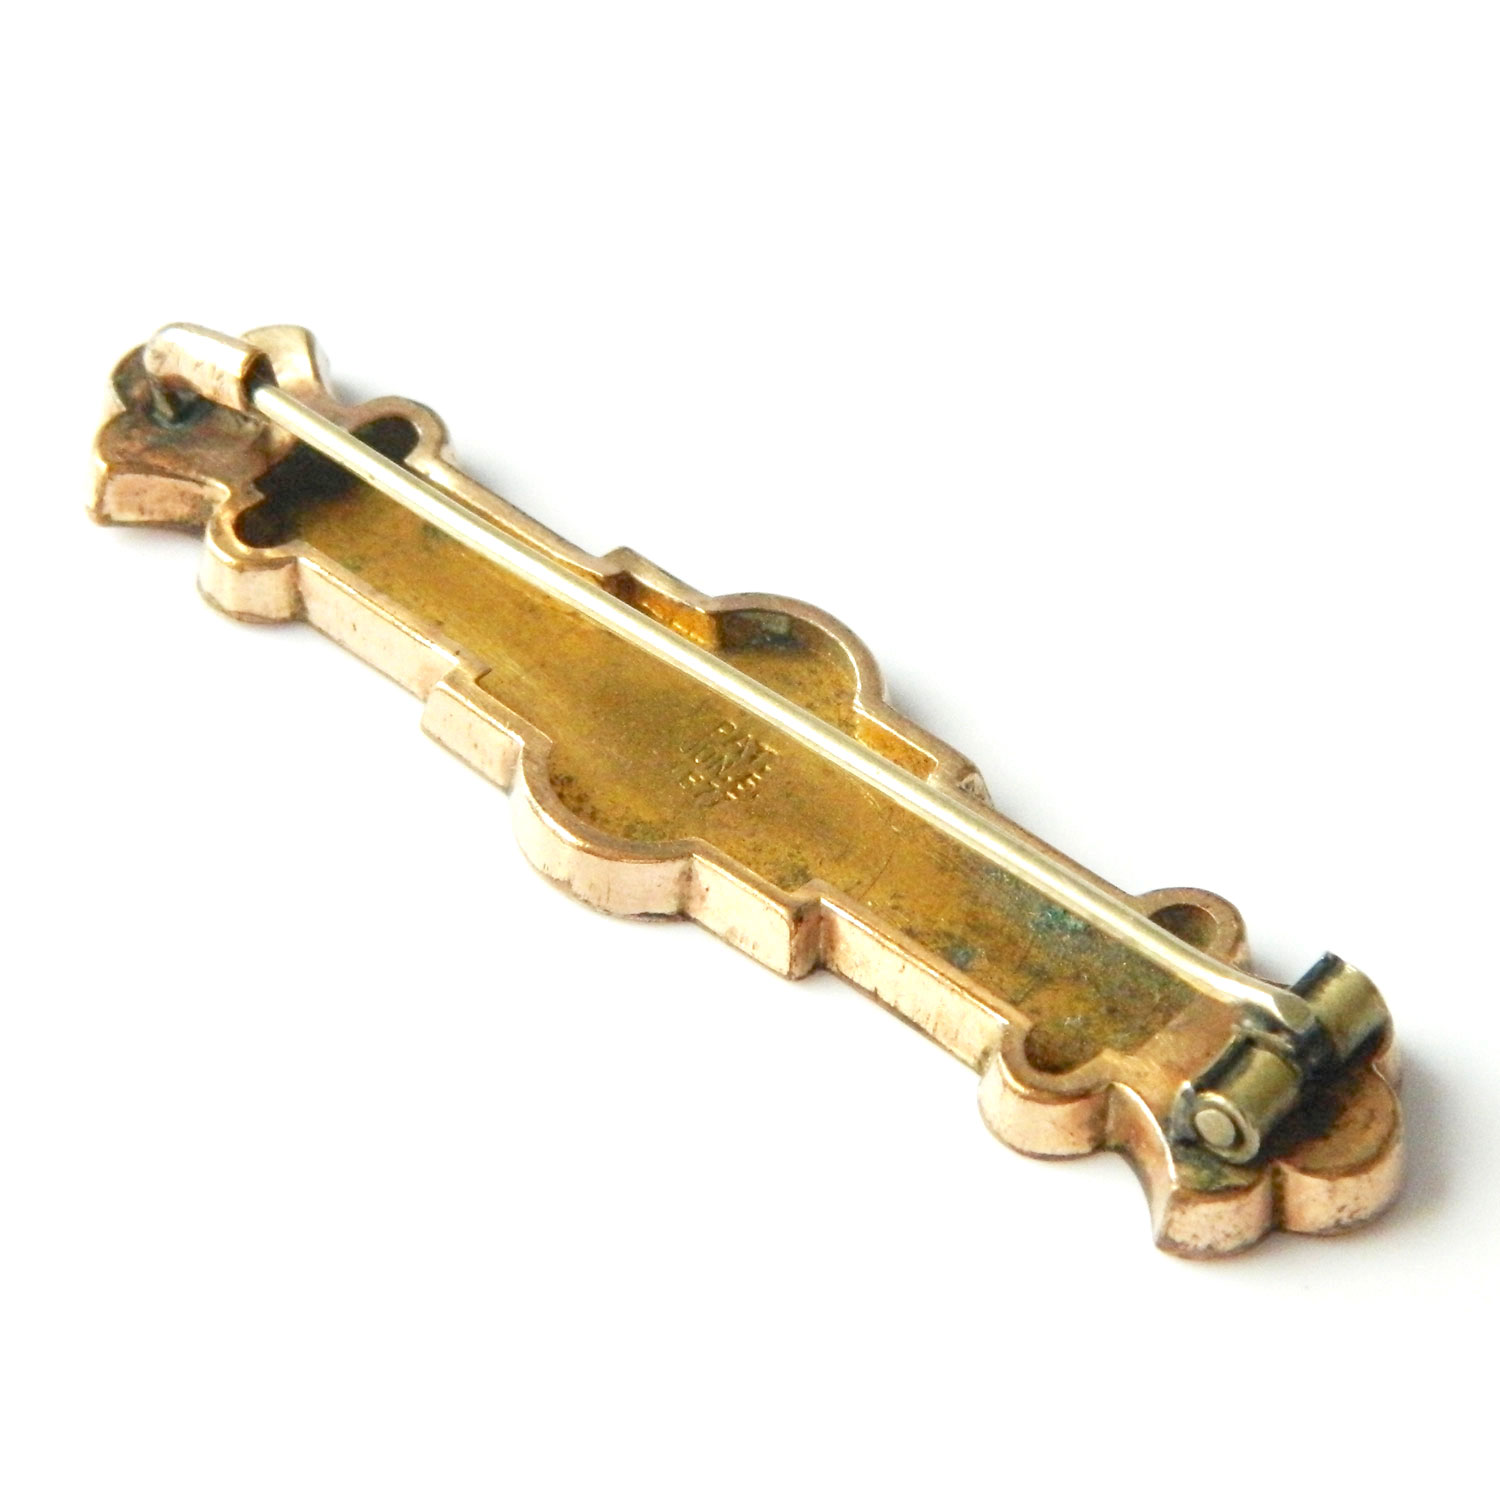 Victorian gold filled bar pin